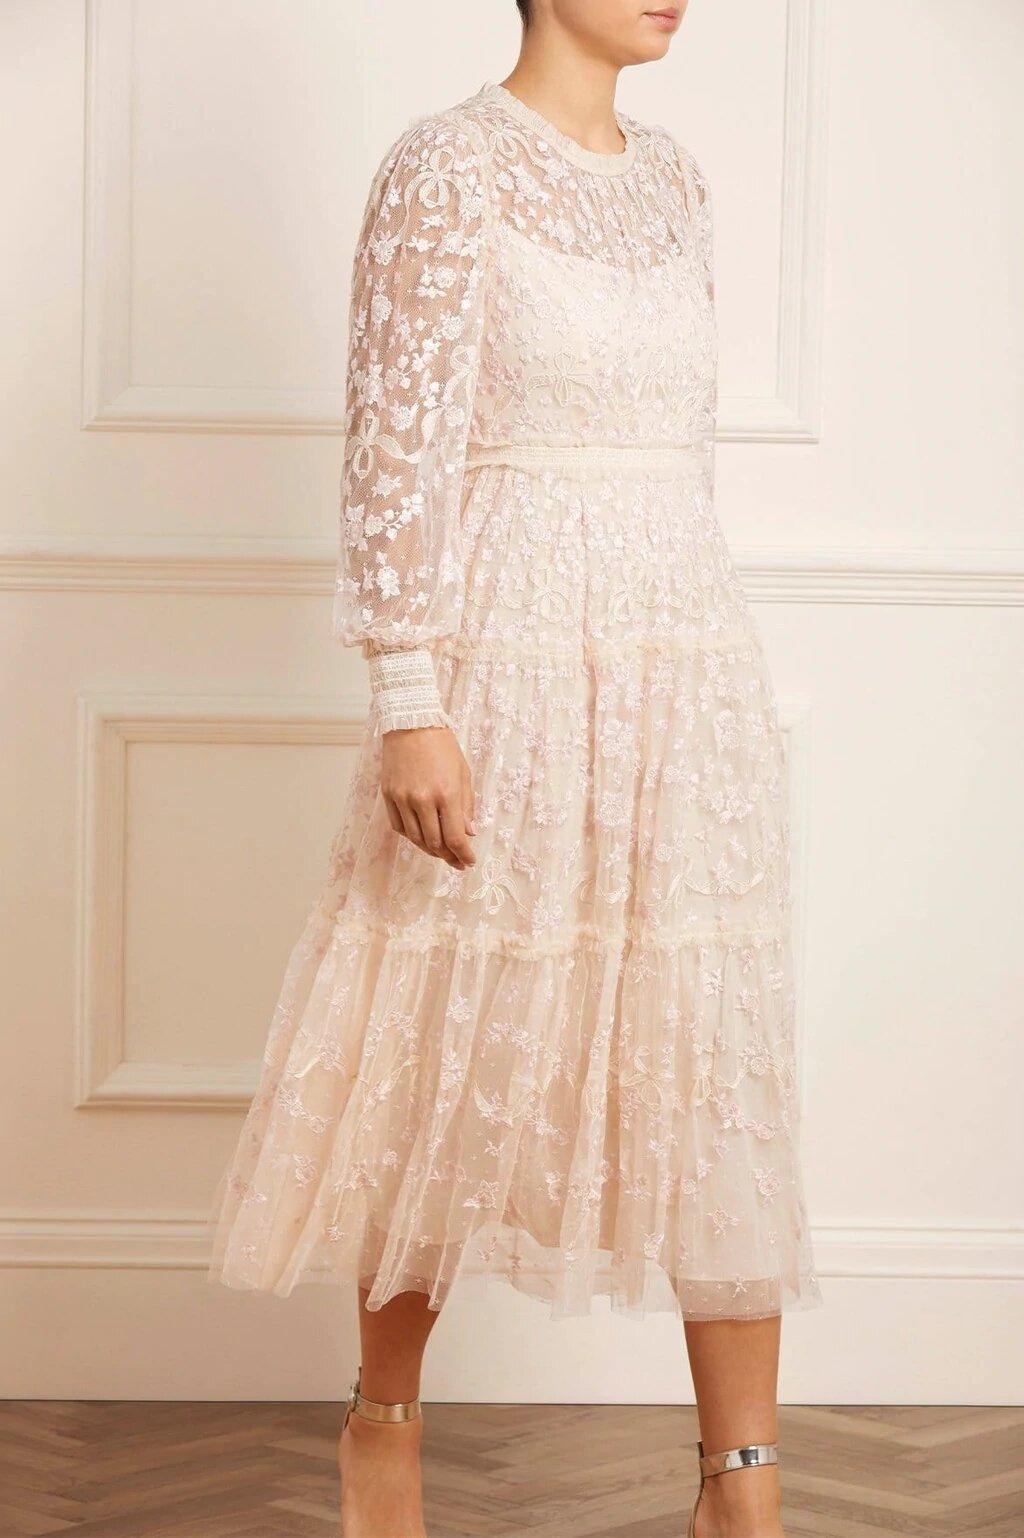 Model wearing an embellished long sleeved tea length wedding dress